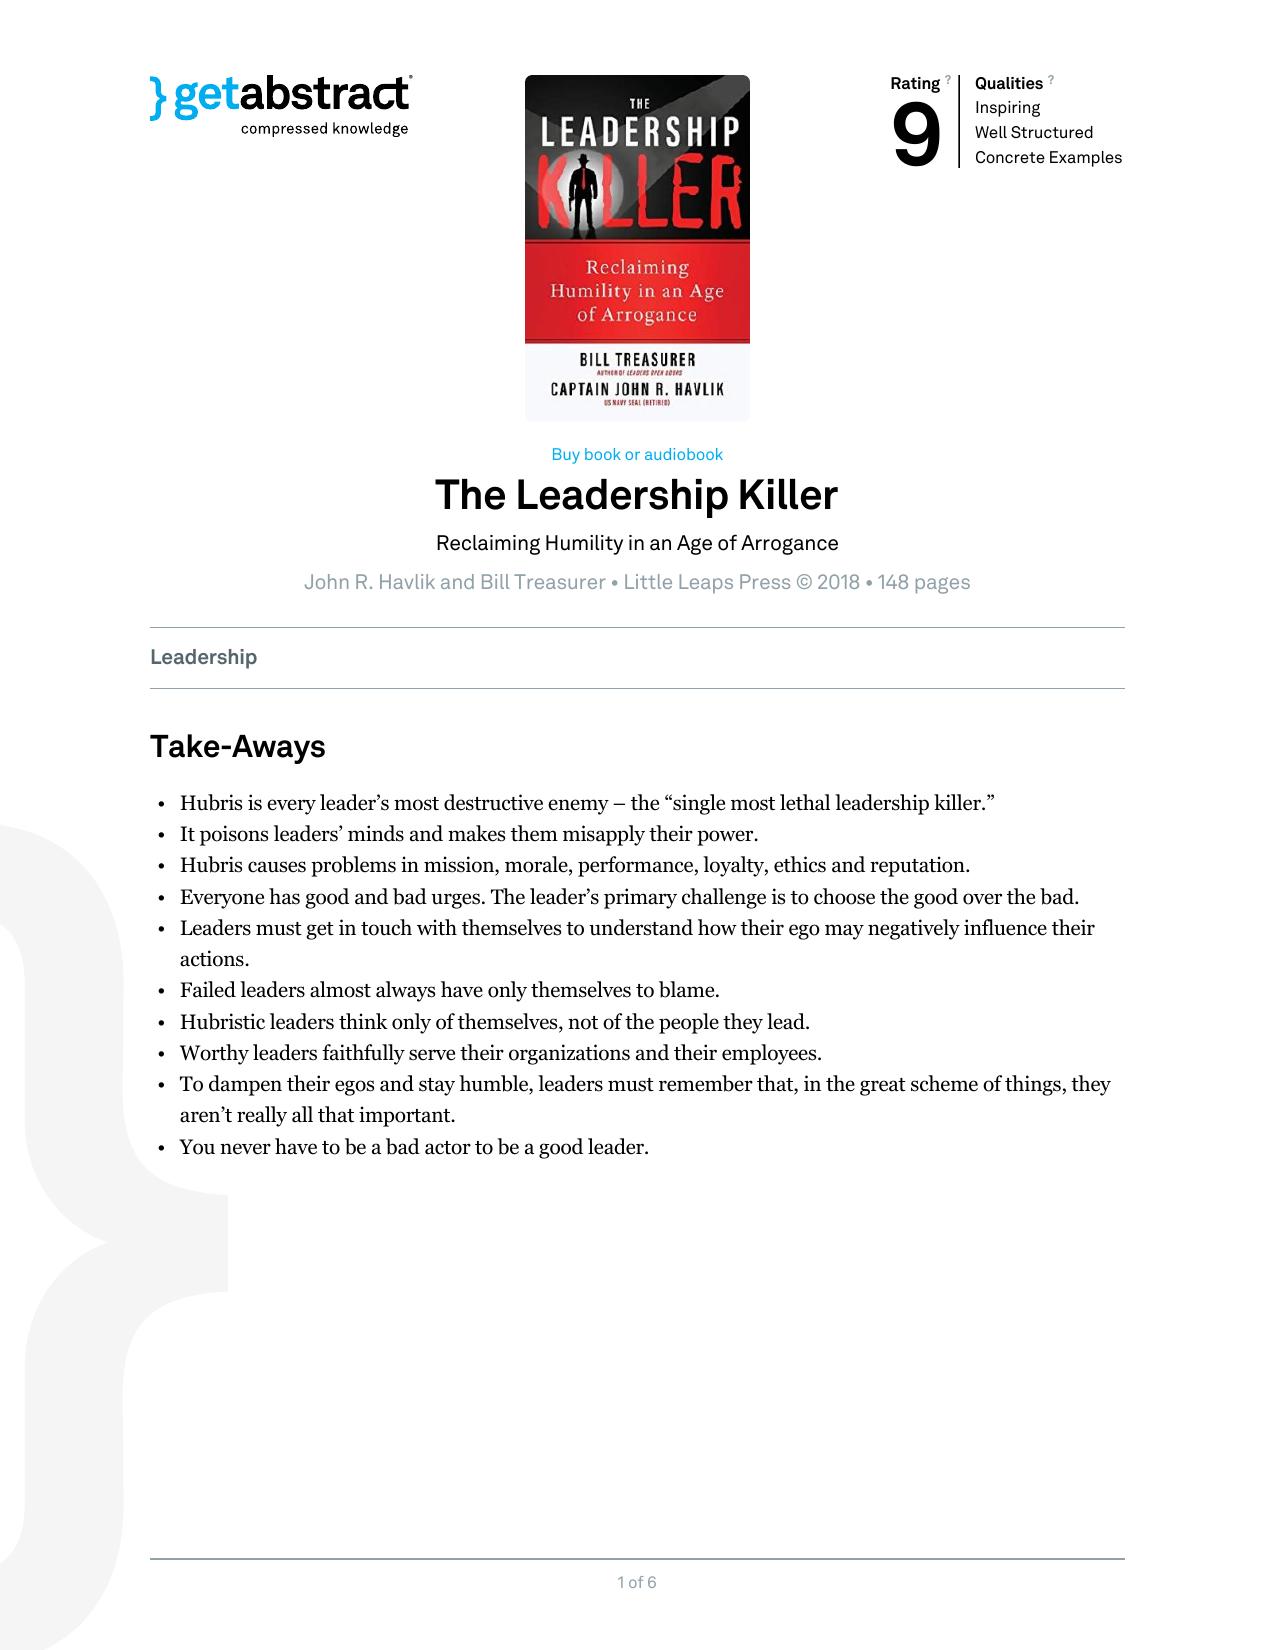 The Leadership Killer (Book Summary)